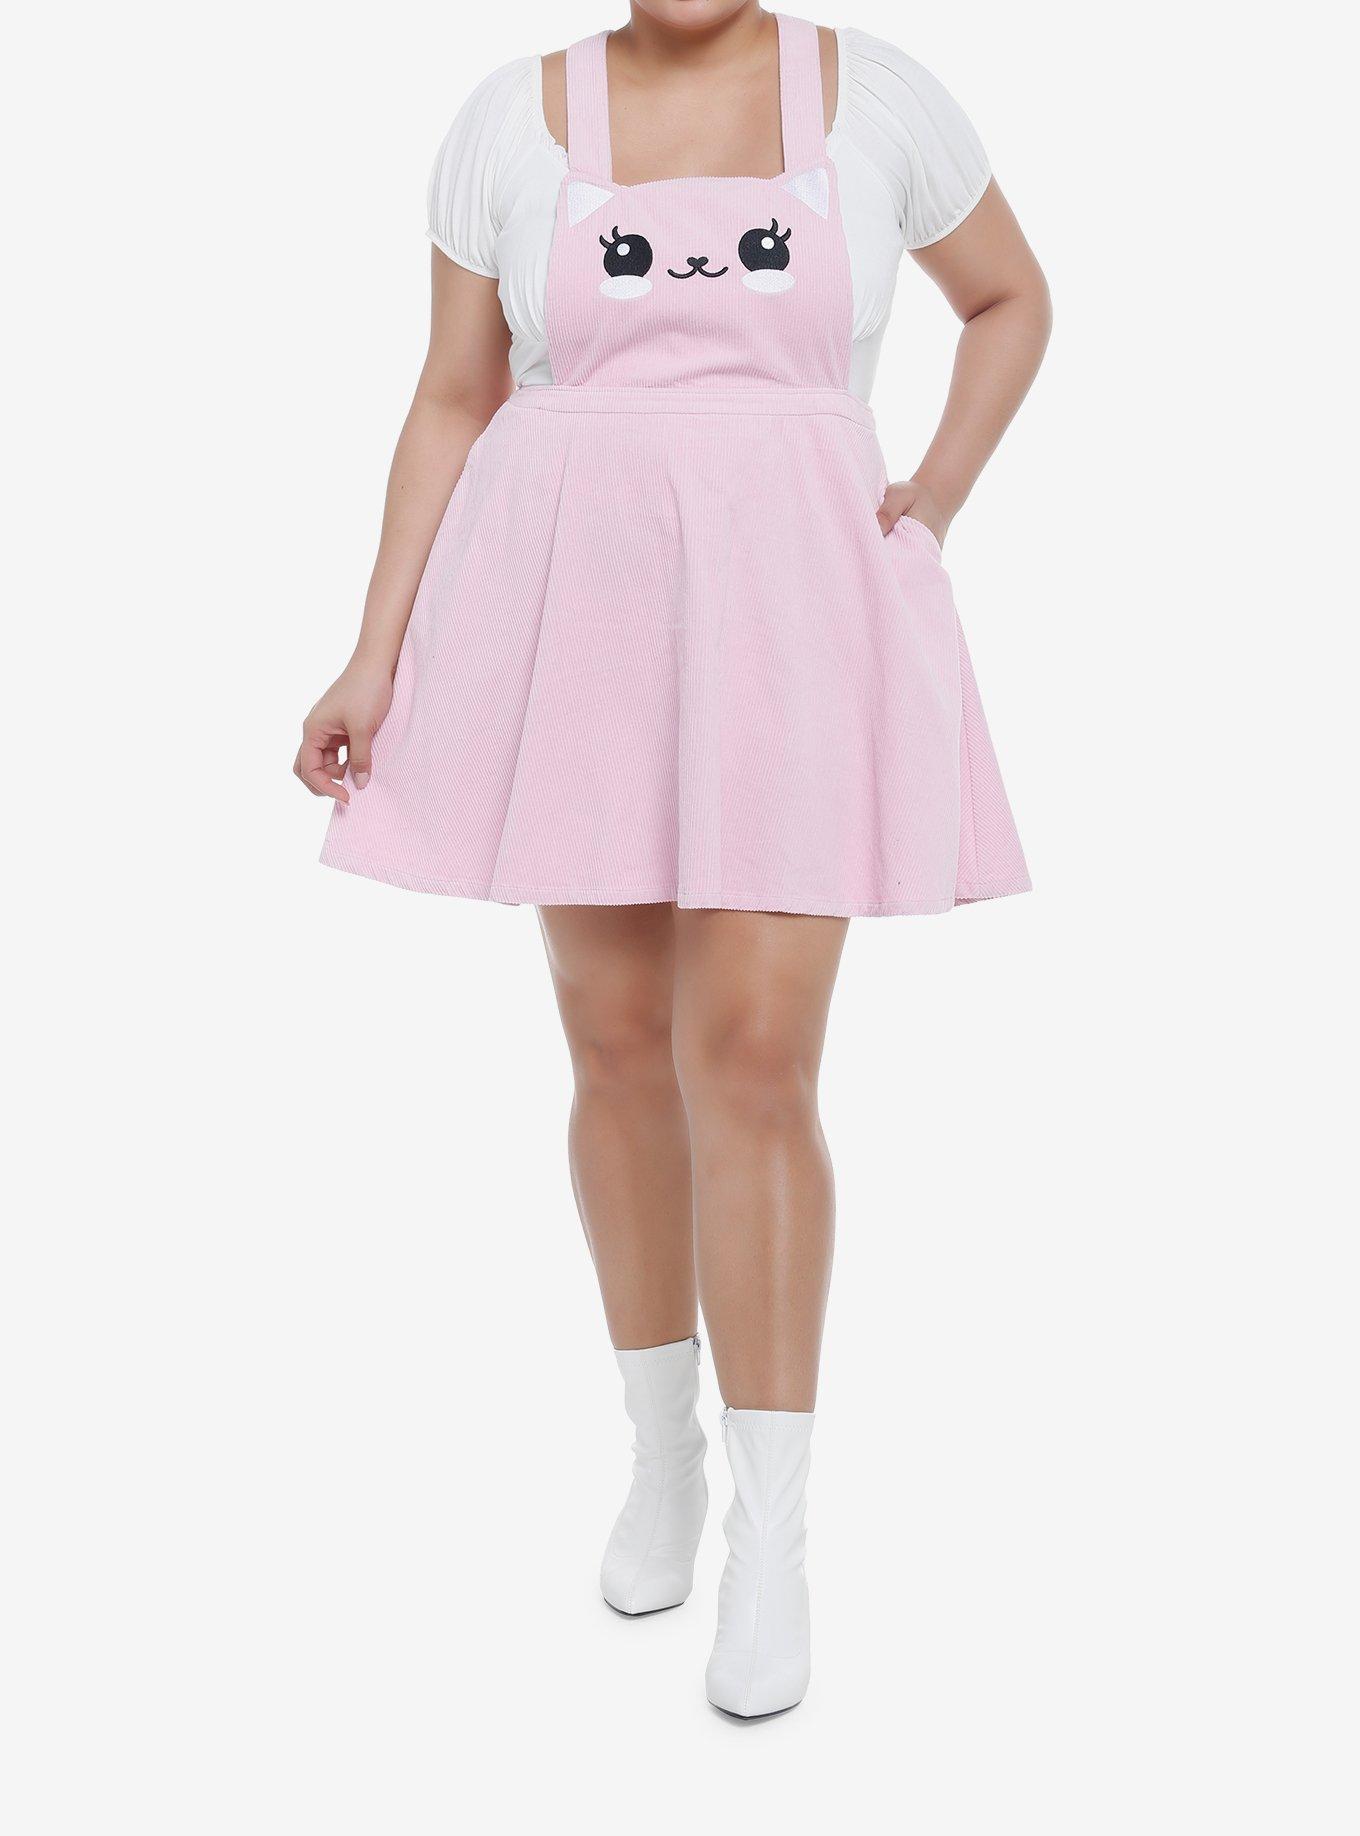 Kitty Cat Pink Corduroy Skirtall Plus Size, PINK, alternate